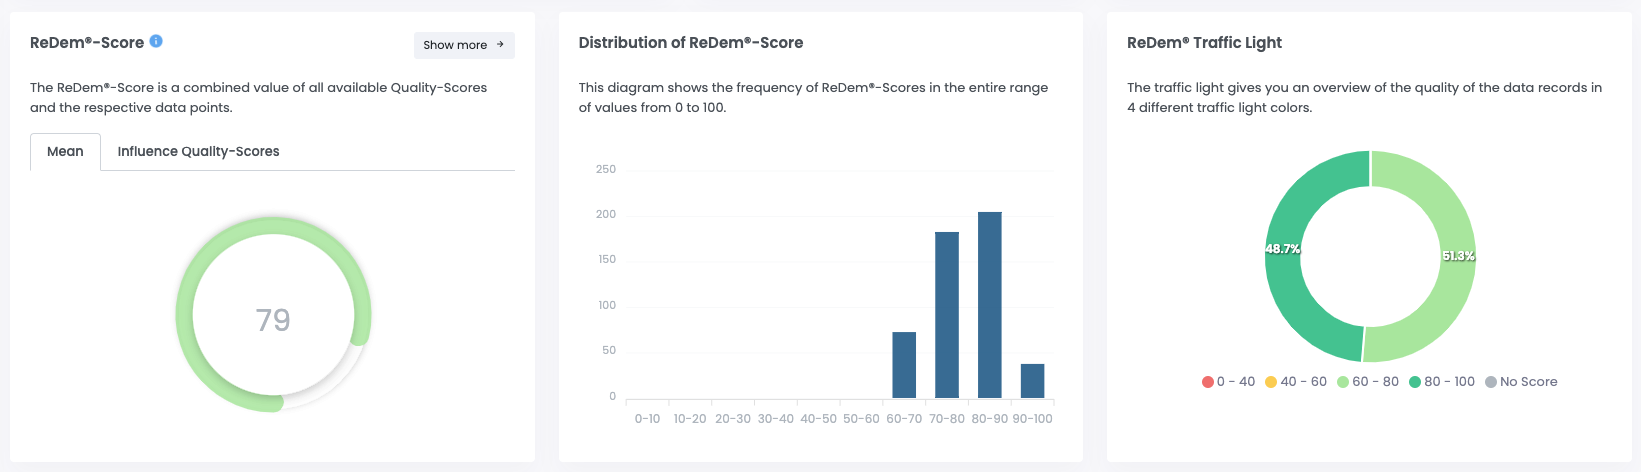 ReDem-Score Charts - cleaned data - DE